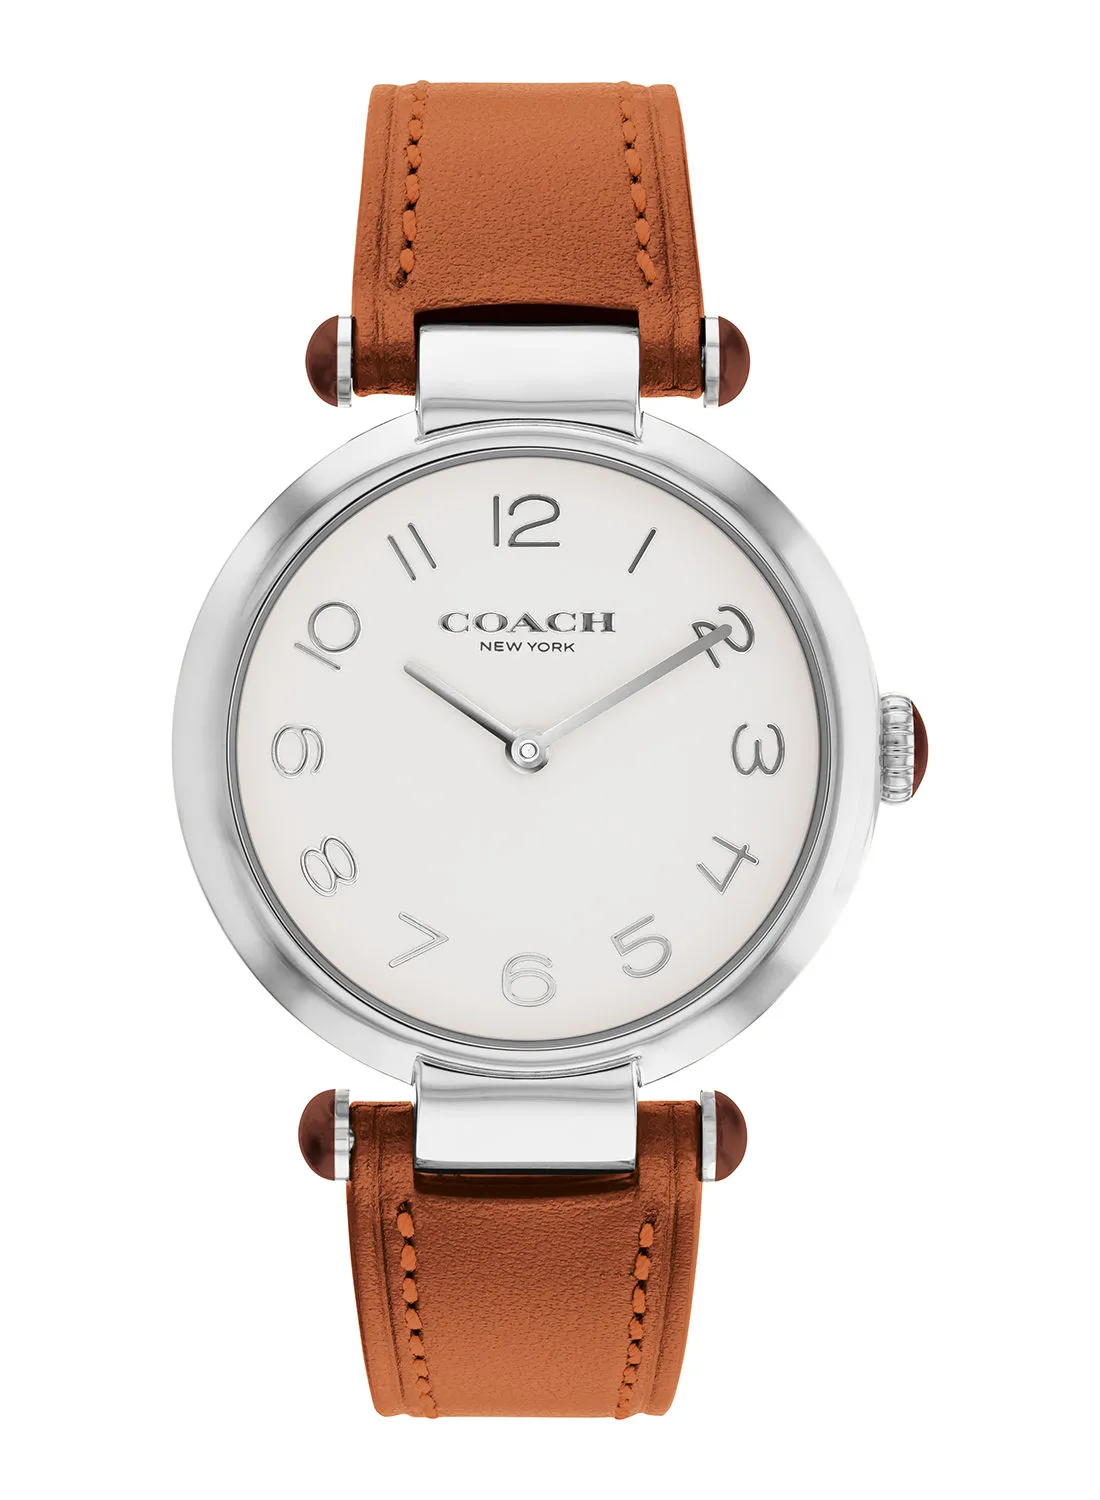 COACH Women's Analog Round Leather Wrist Watch 14504000 - 34 mm